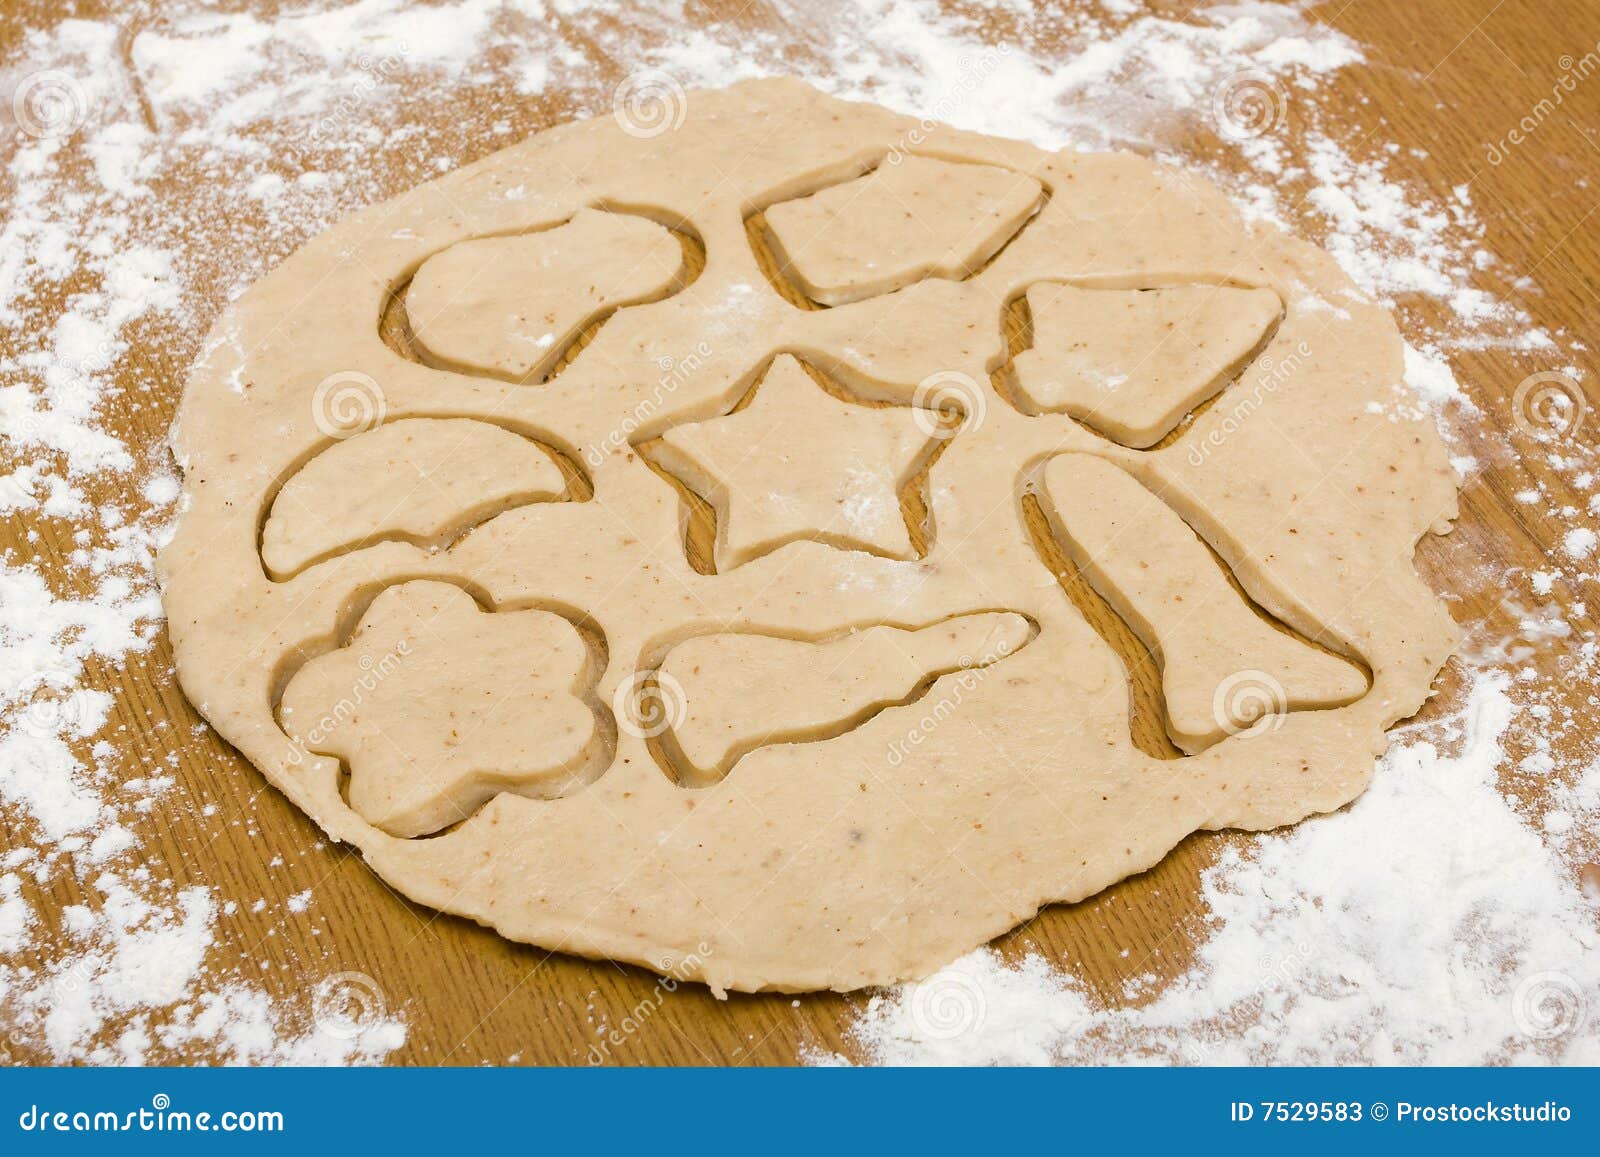 Тесто на песочное печенье с маслом. Печенье «песочное». Тесто для печенья. Тесто для печенек. Красивые печеньки из песочного теста.